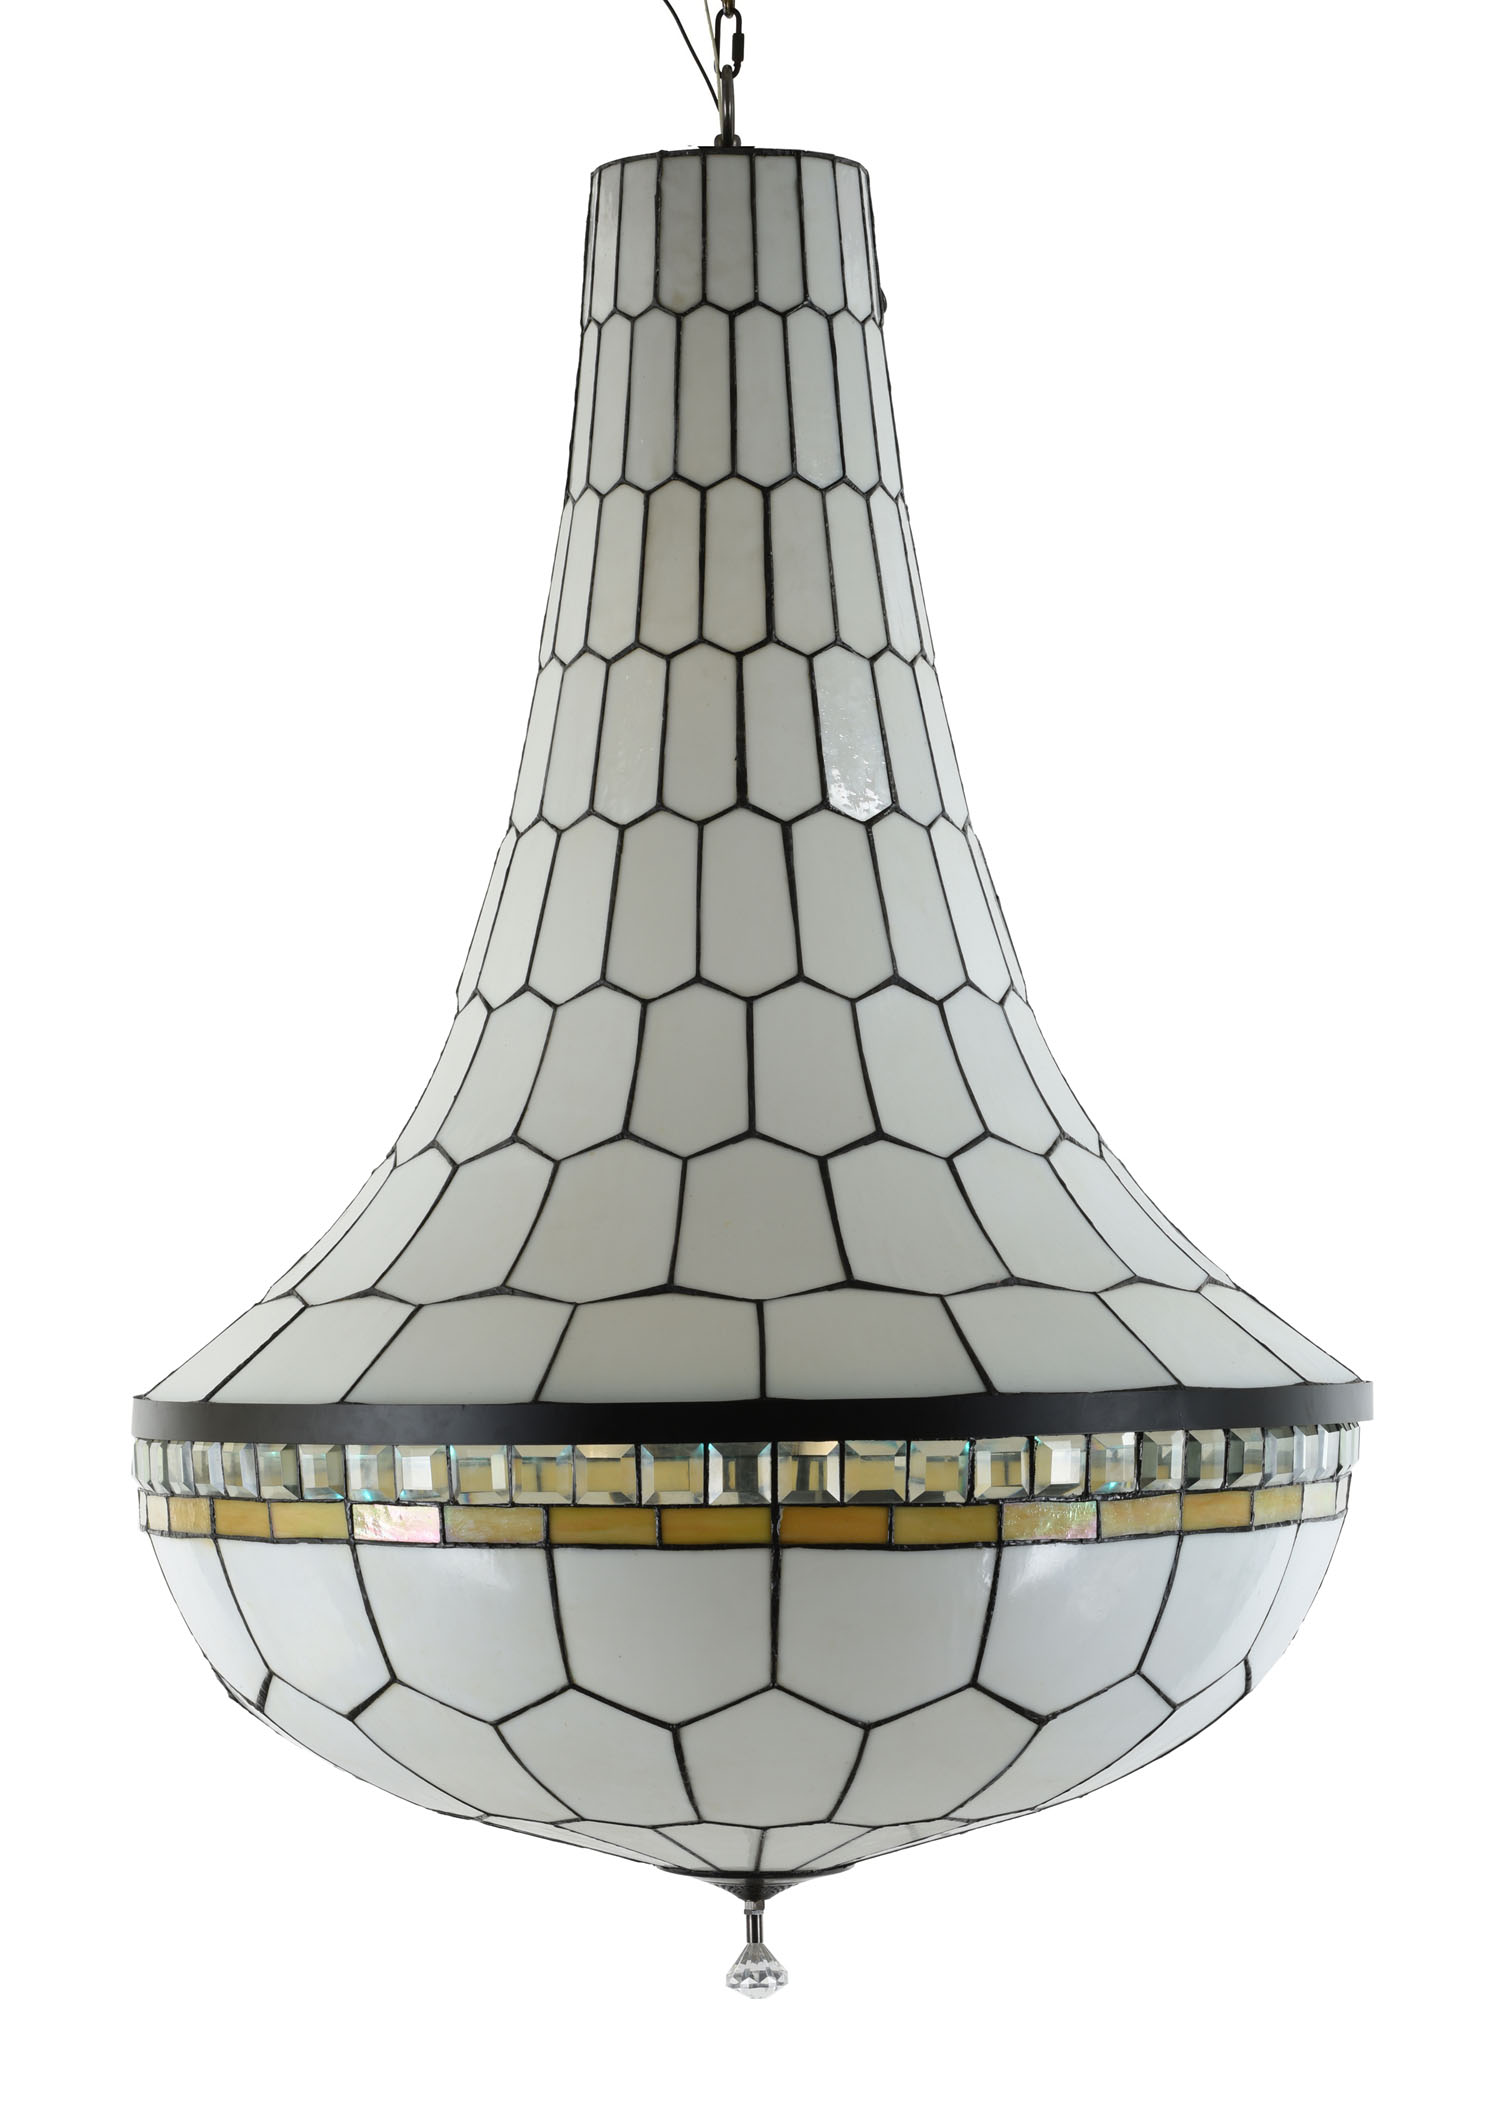 The Tiffany Pendant Wissmann Jewel: a festive lamp!